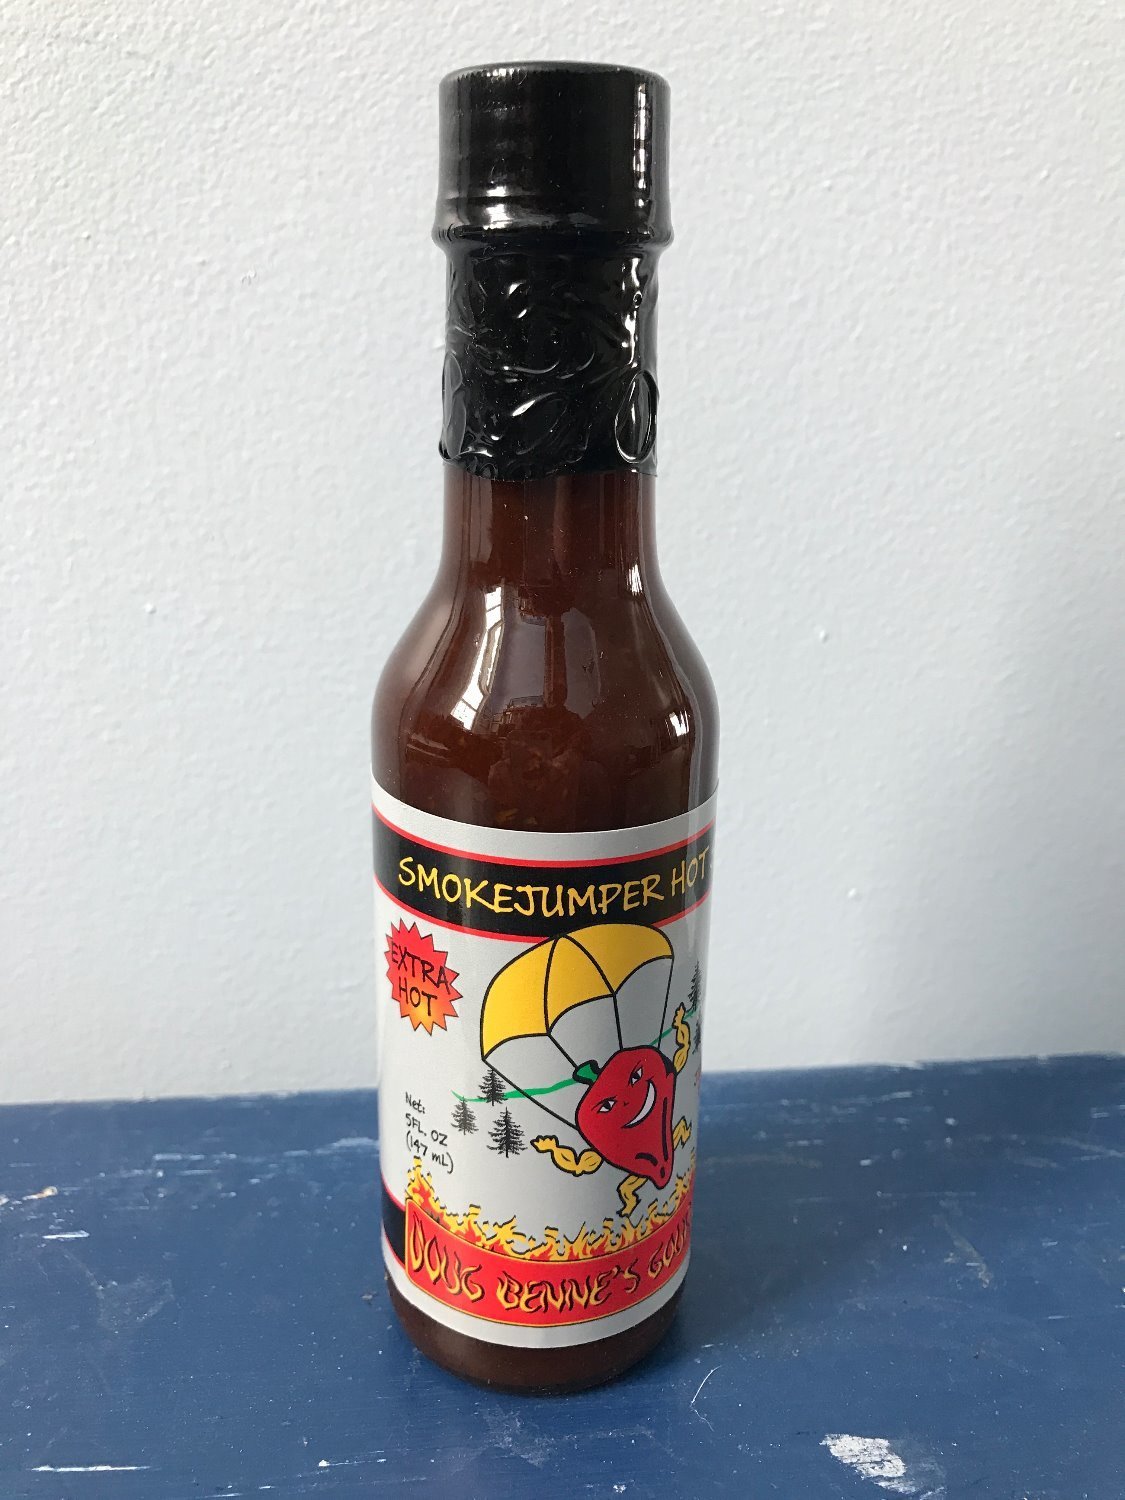 Extra Hot - Smokejumper Hot Sauce